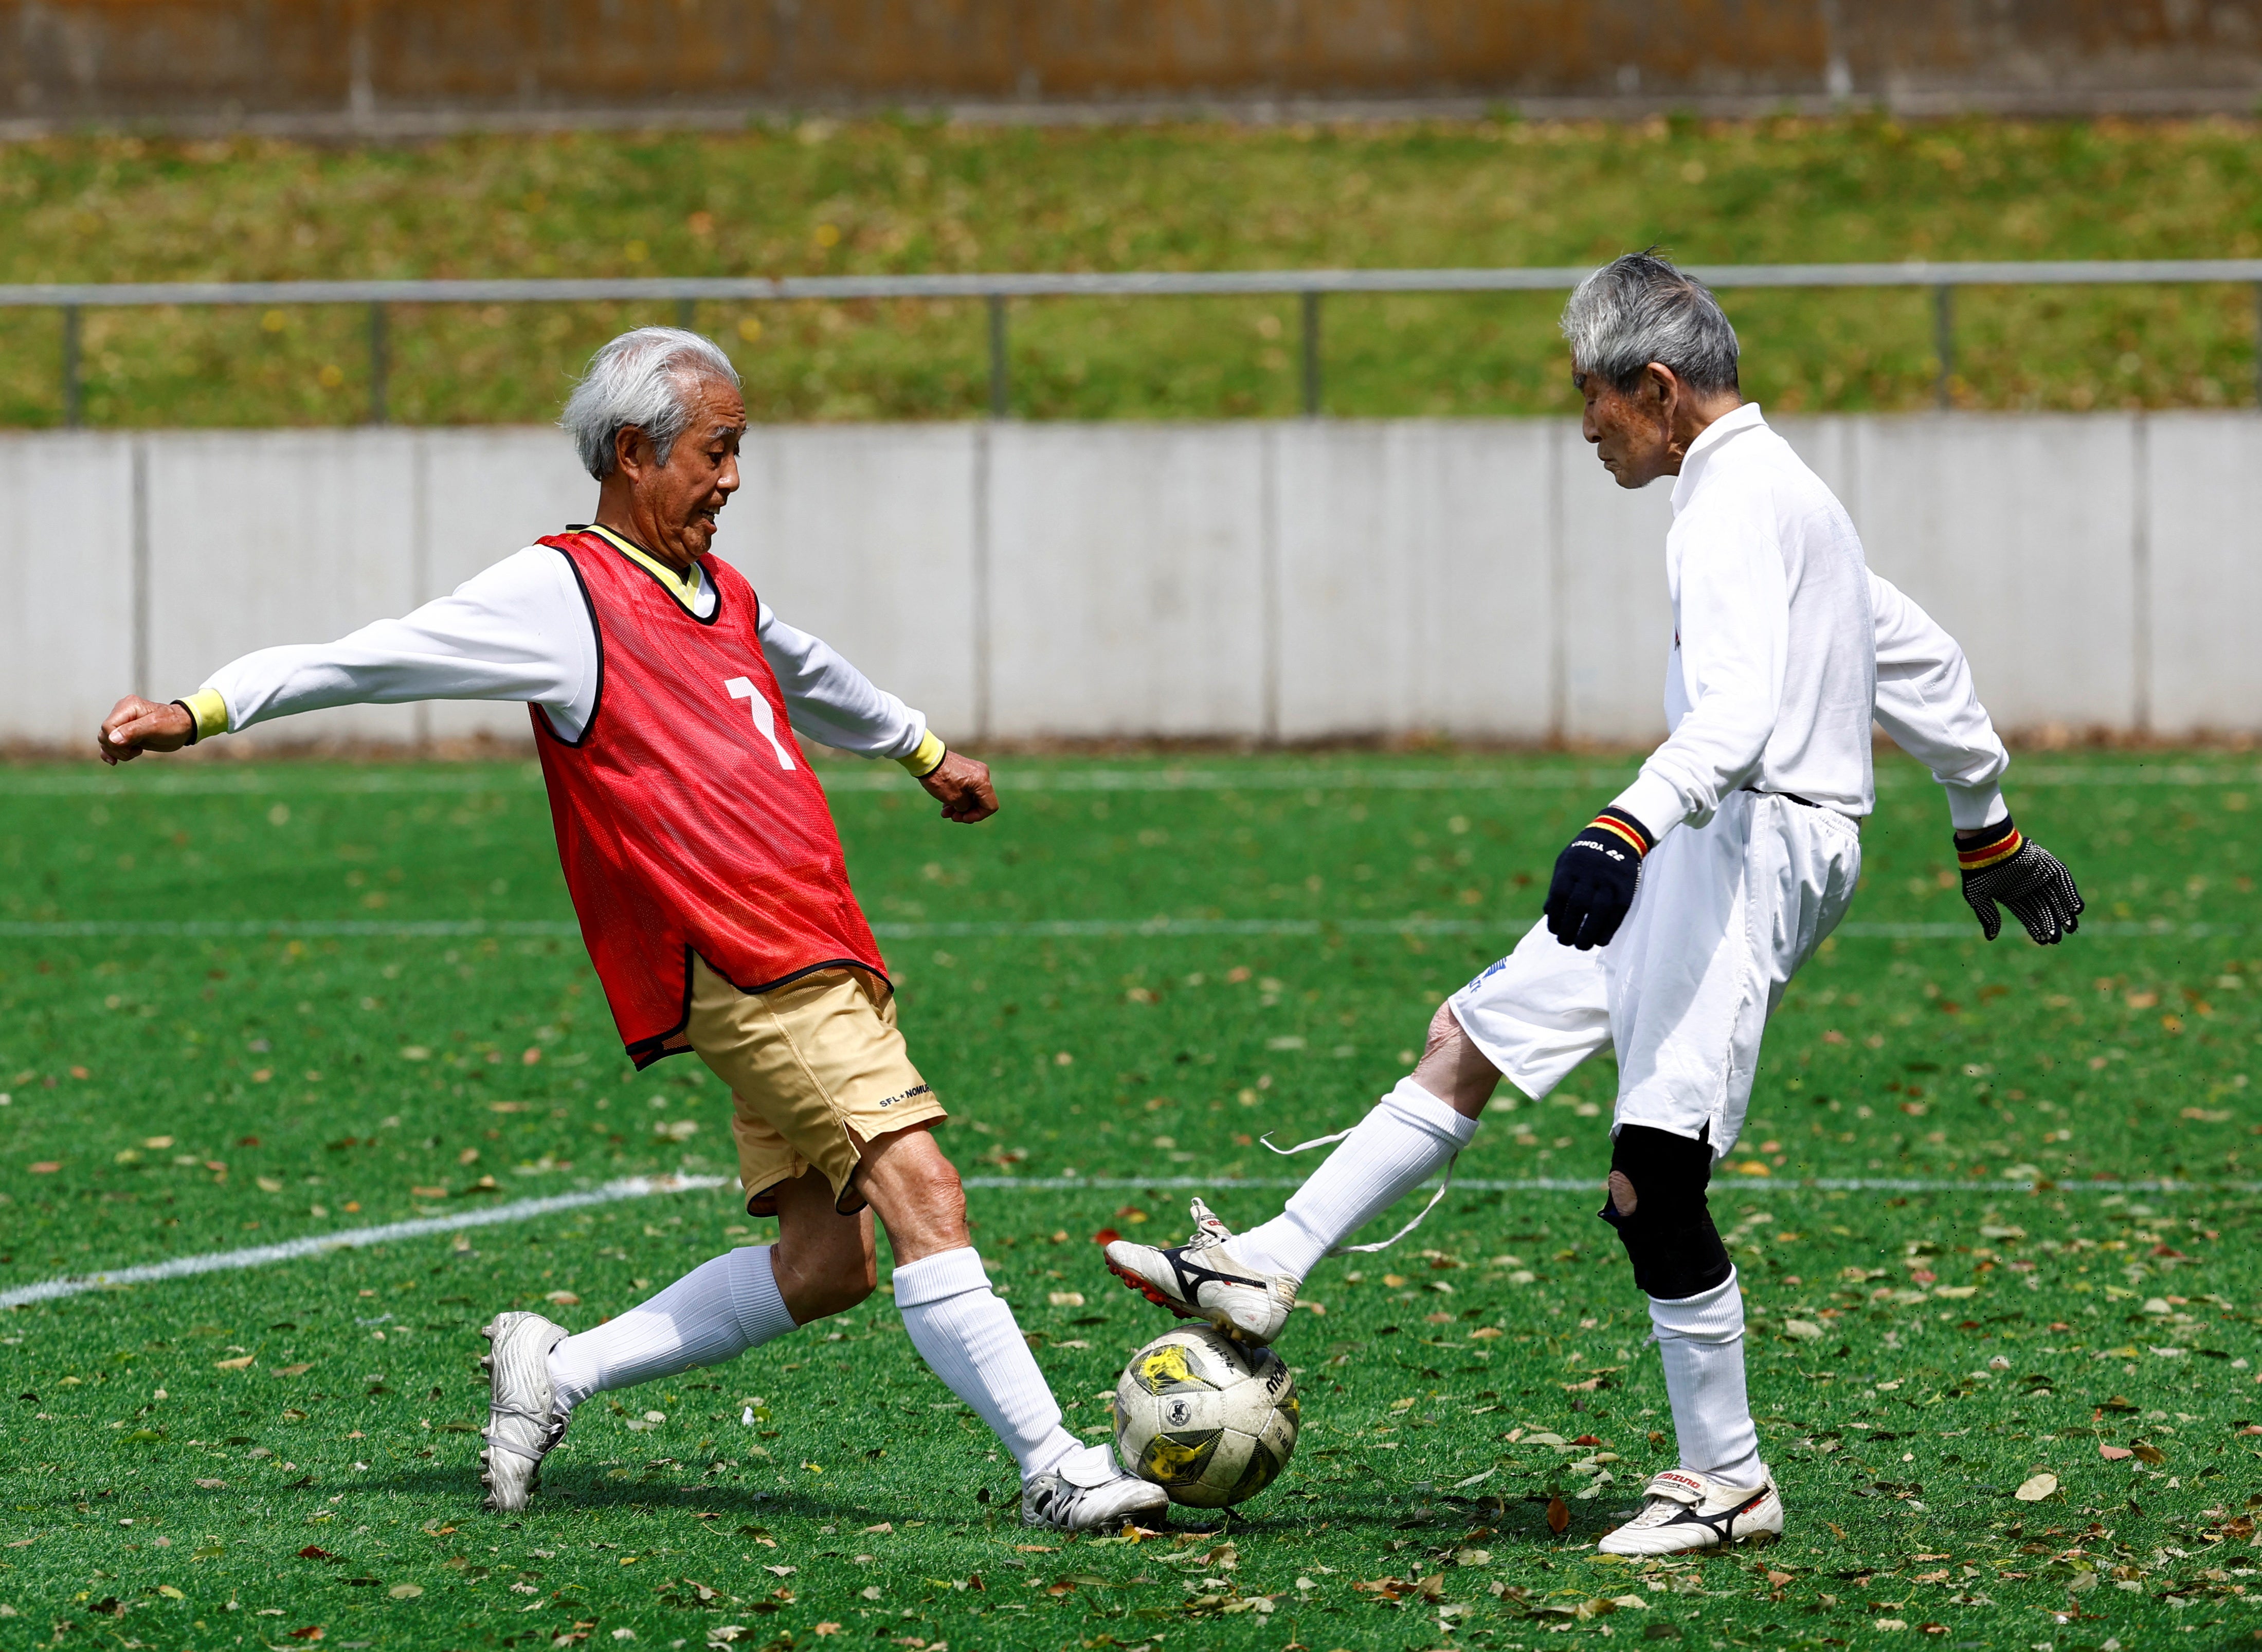 Nomura shoots to score a goal against Blue Hawaii’s goalkeeper Hiroshi Nishino, 87, at the SFL 80 League opening match